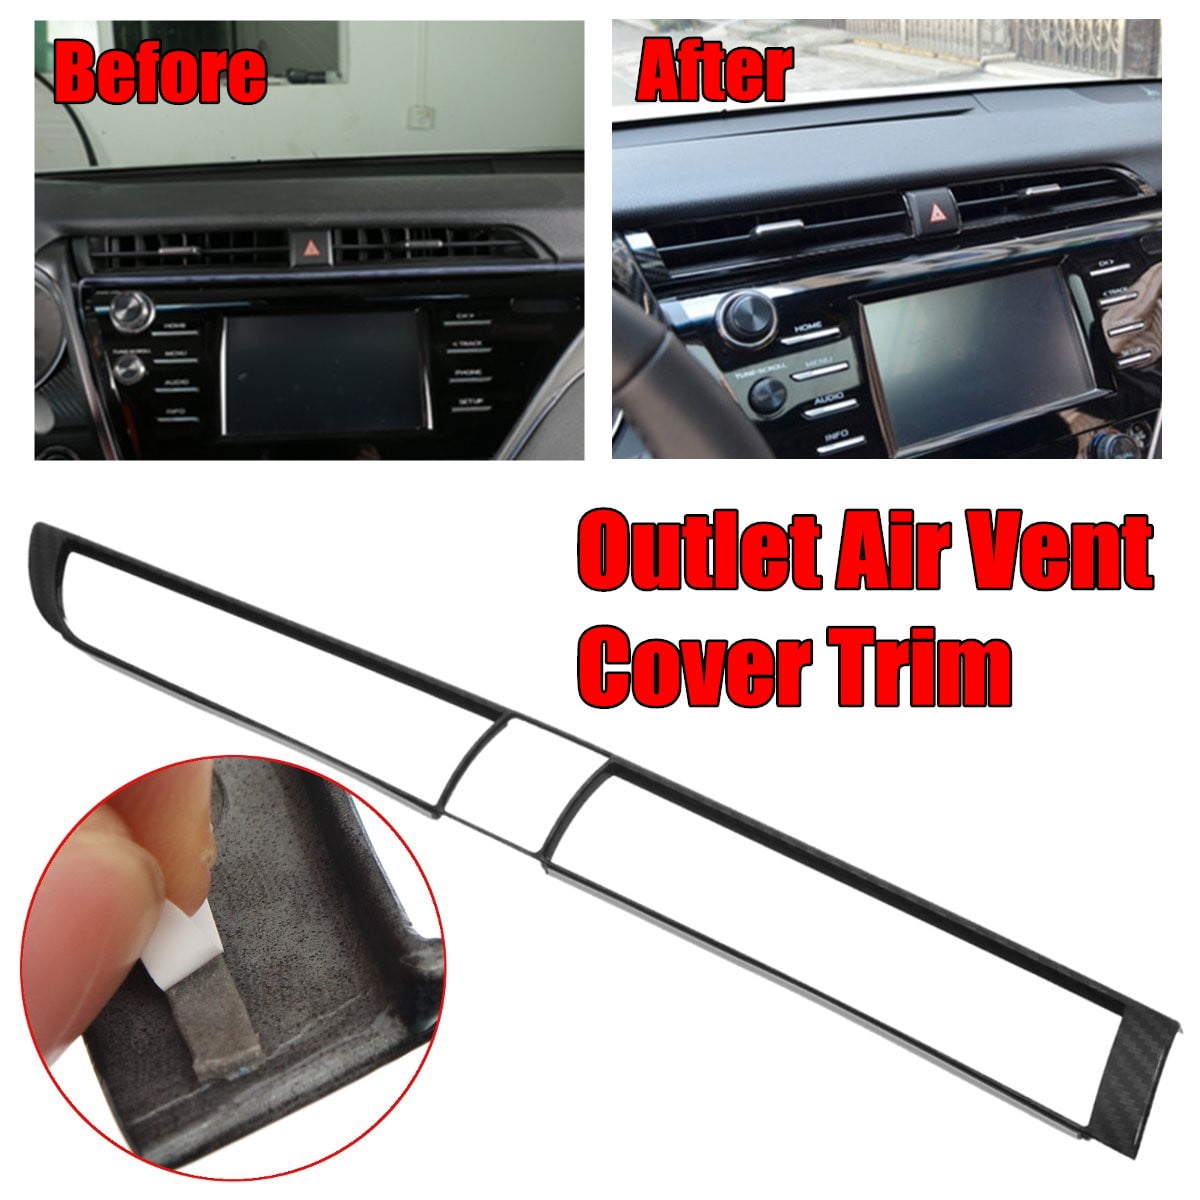 1x Outlet Air Vent Cover Trim Interior Central Carbon Fiber For Toyota Camry 